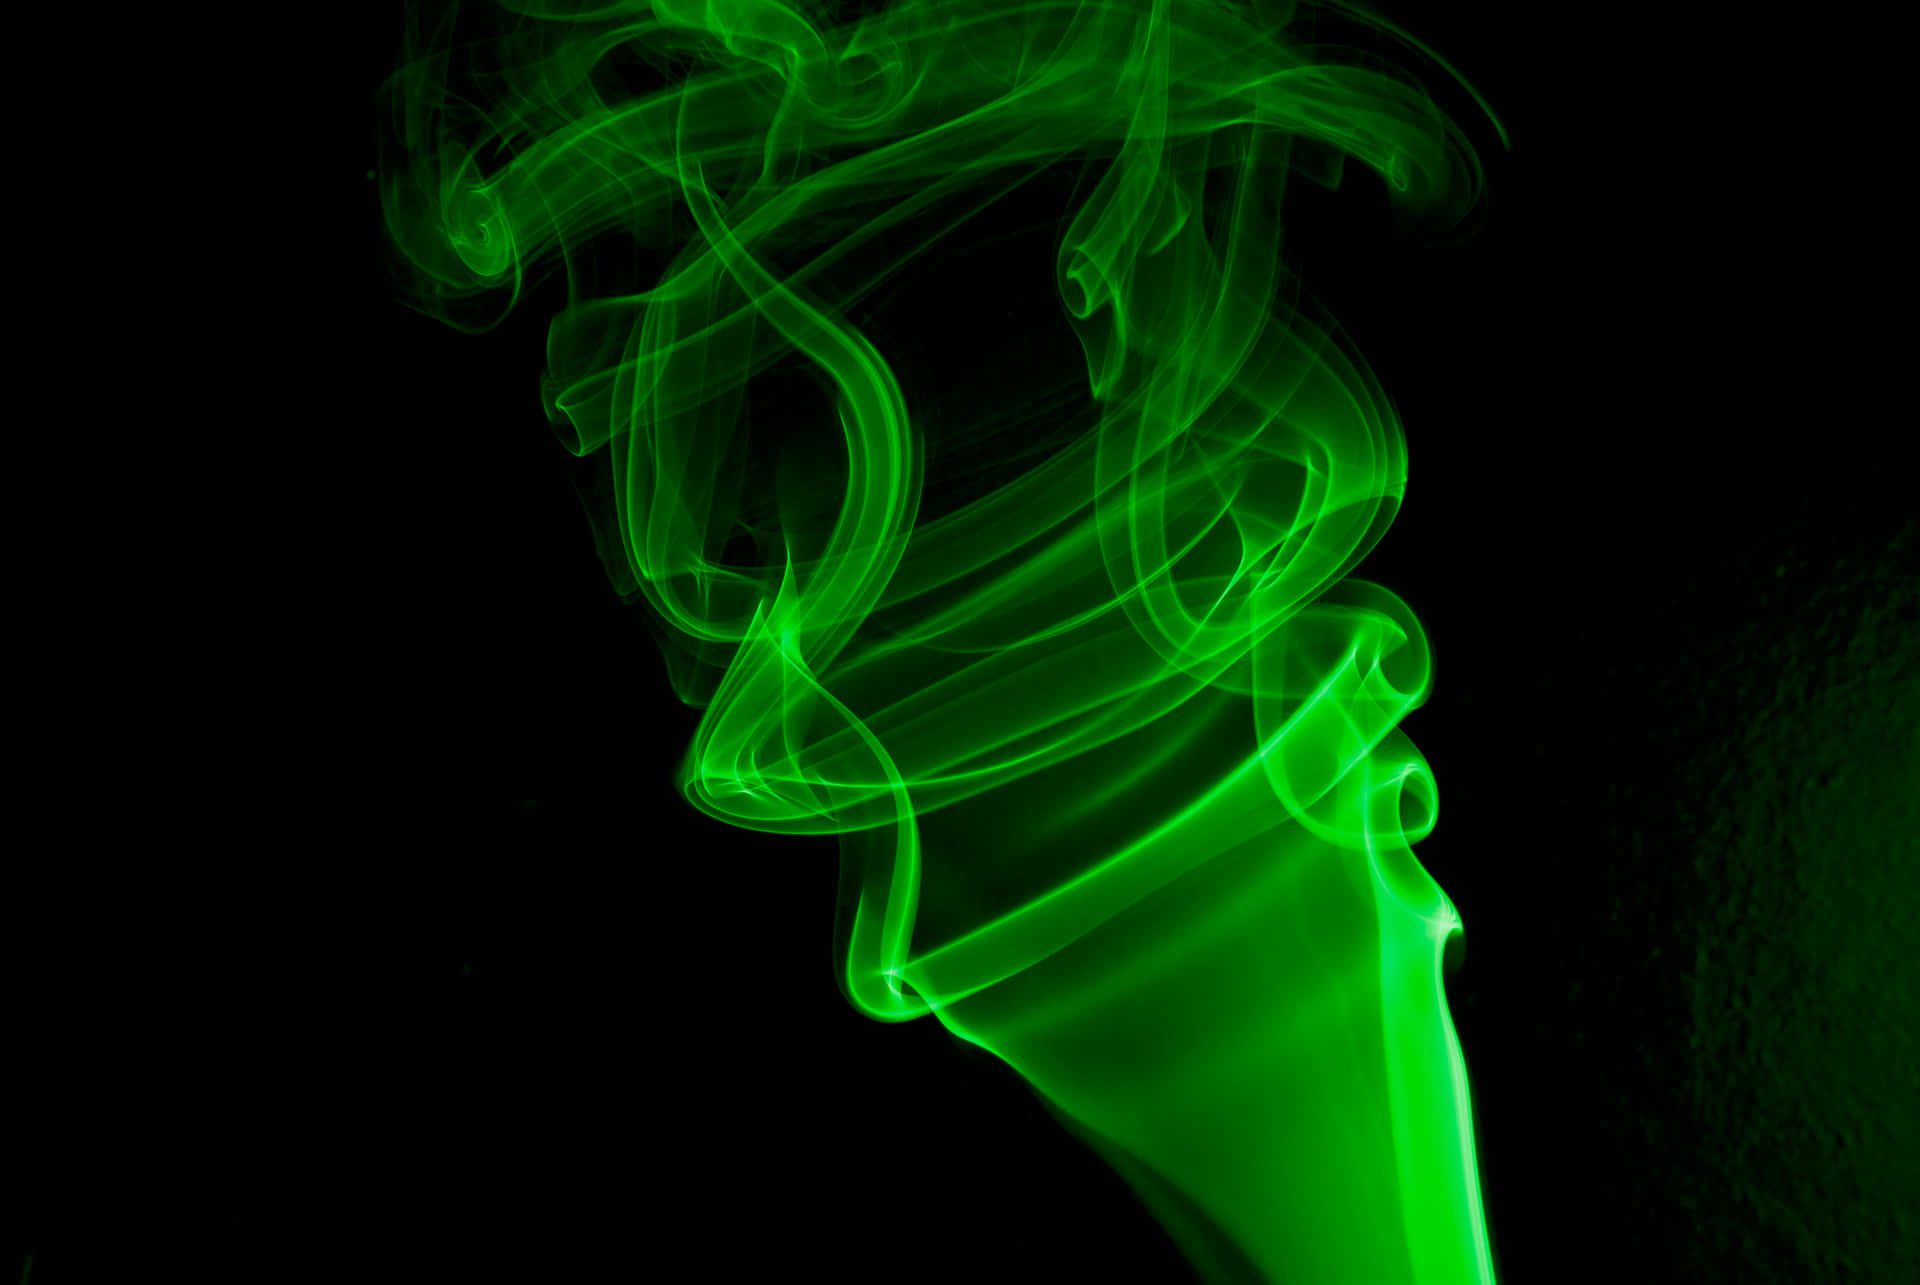 Mystifying Green Smoke Design Against a Dark Background Wallpaper